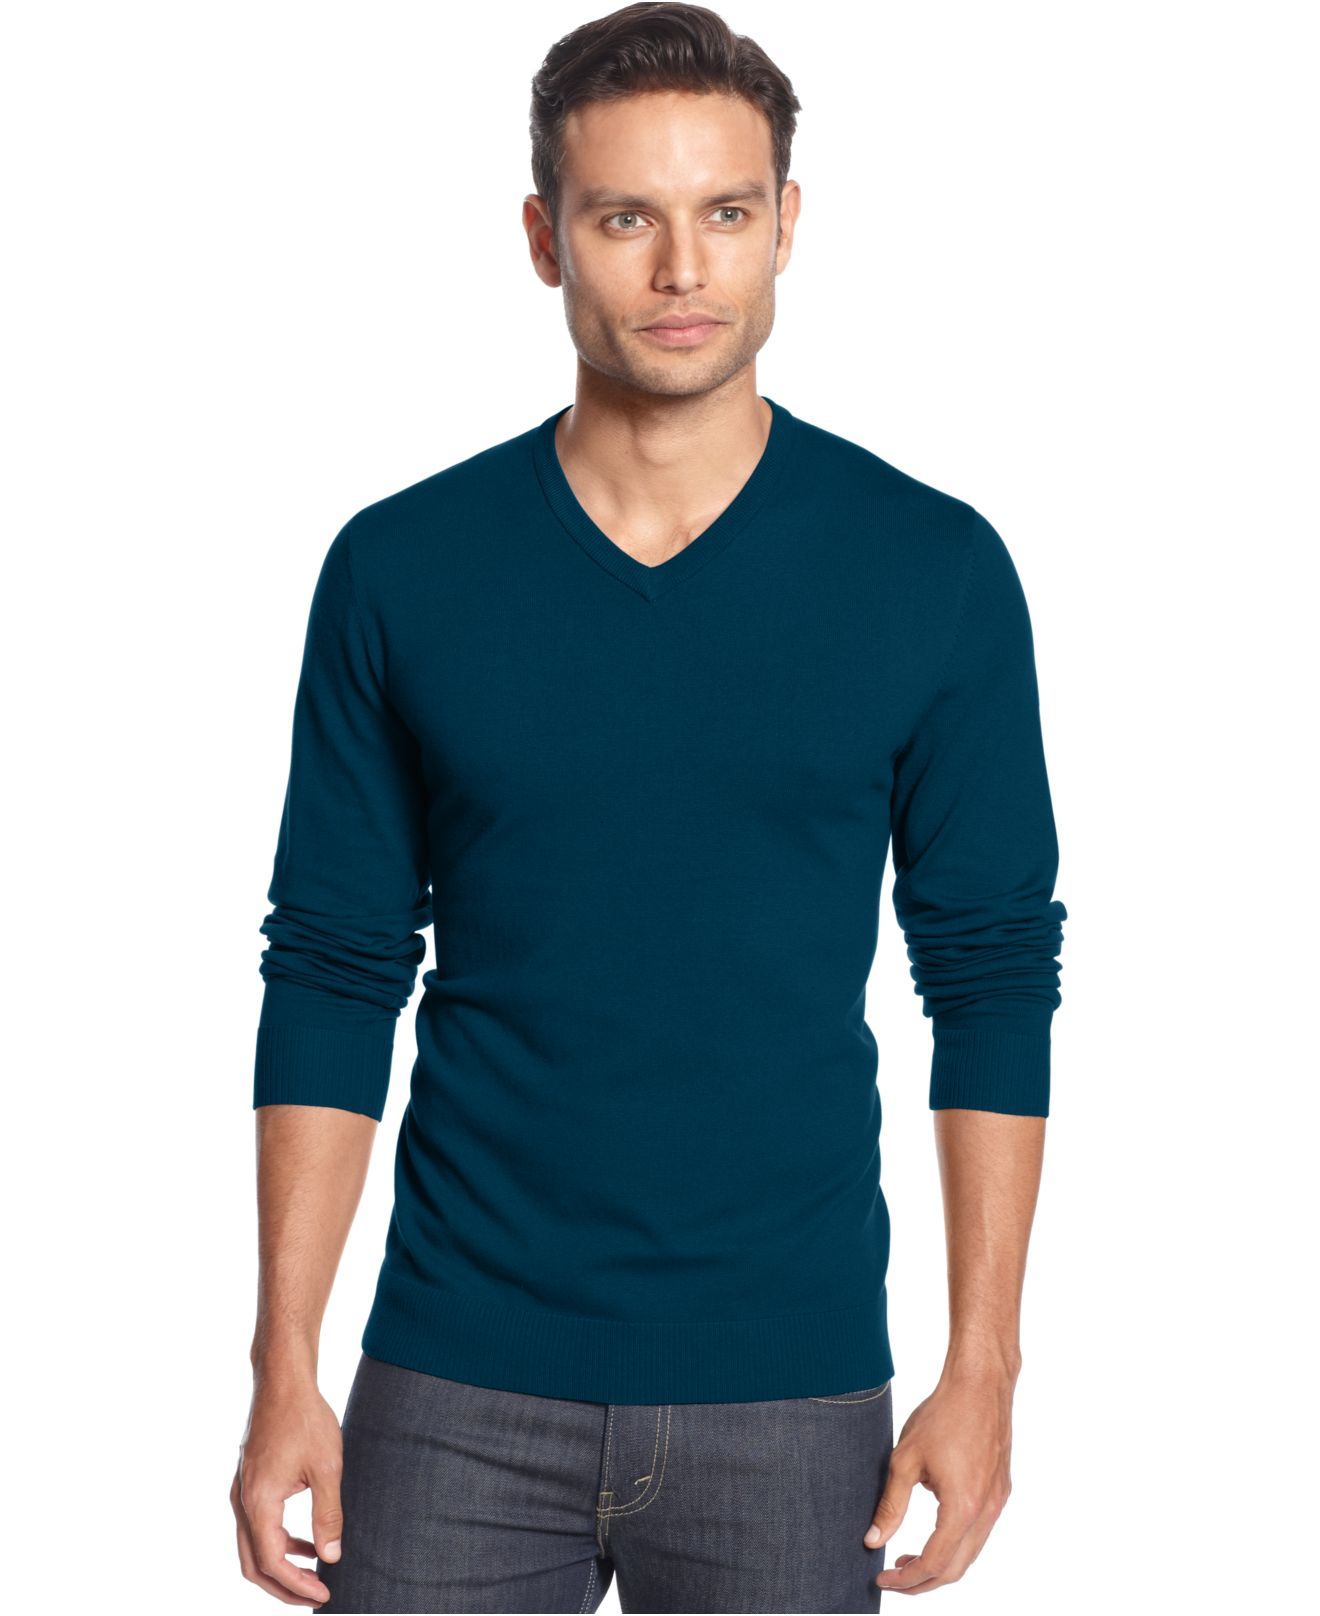 Aliexpress.com : Buy VIISHOW Brand Men Sweater Pullover